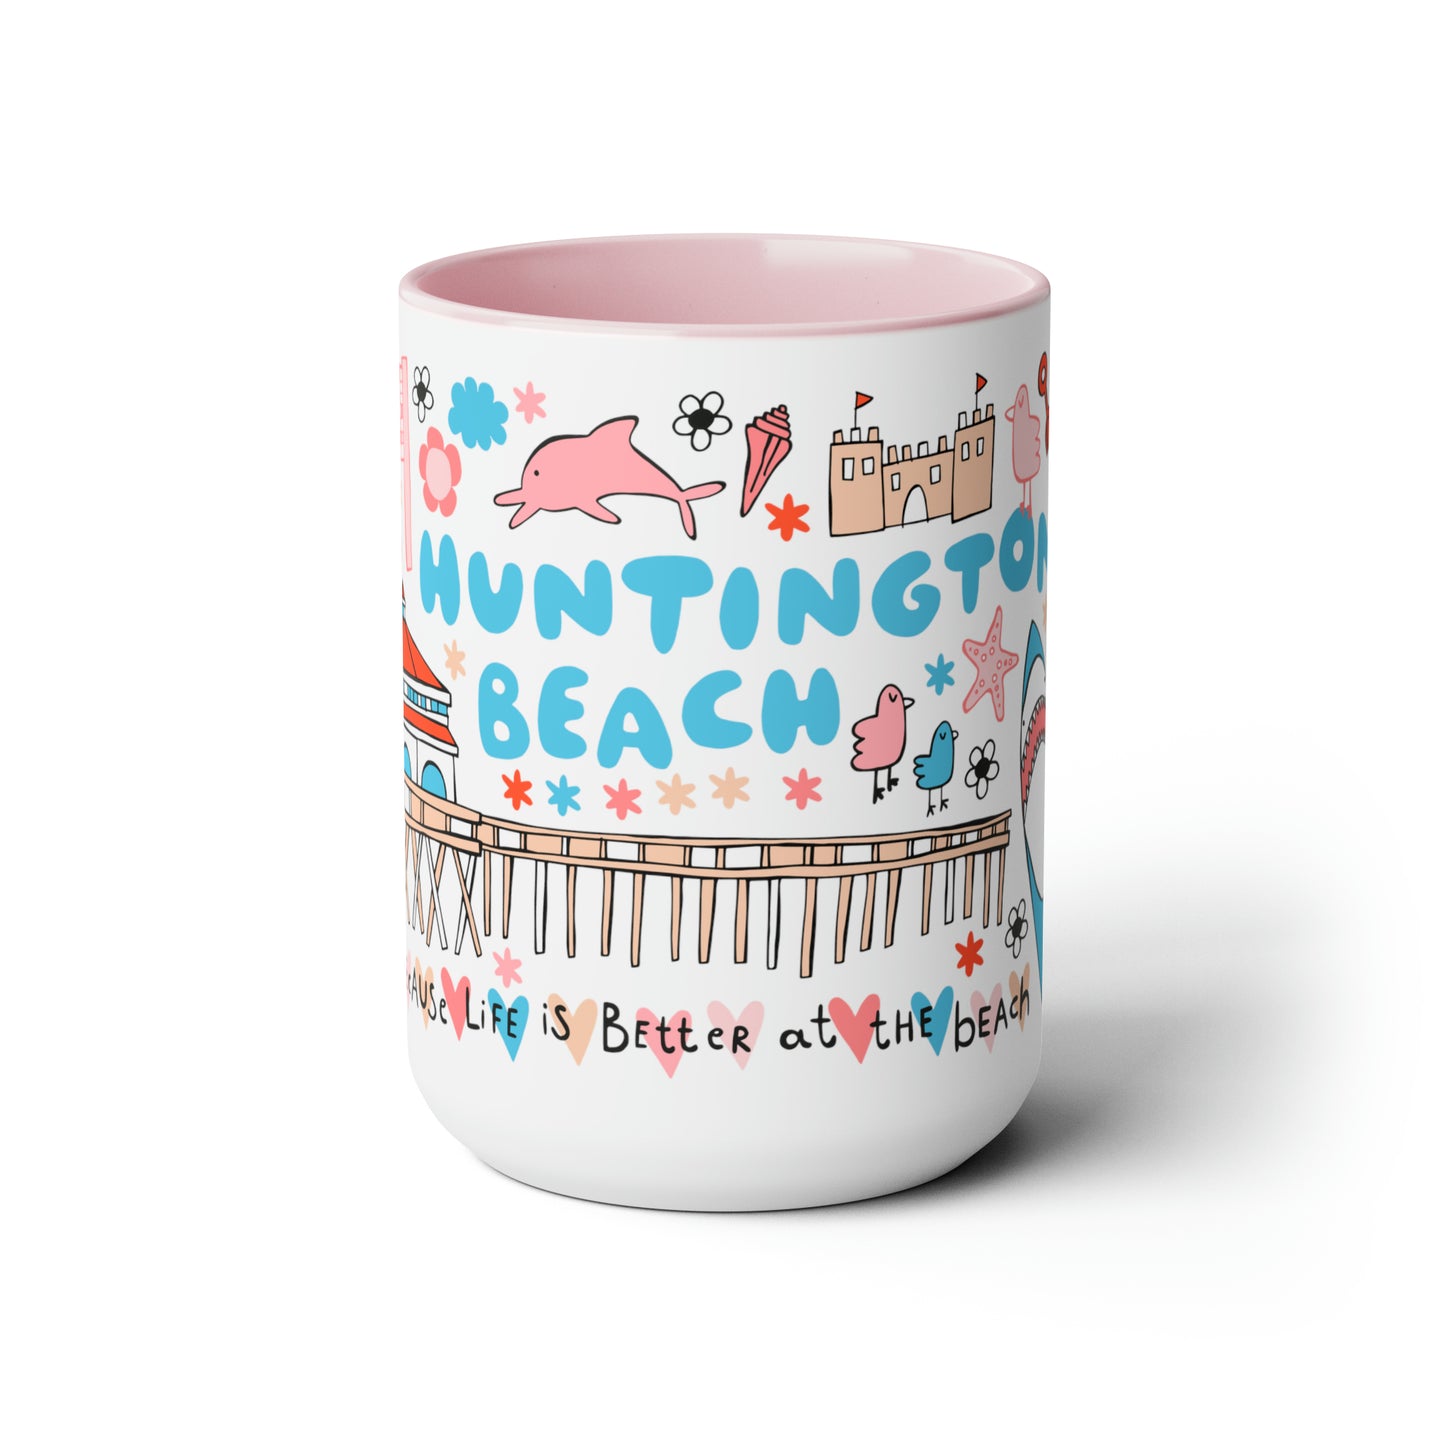 Huntington Beach - *BIG* Coffee Mug (15oz, pink)